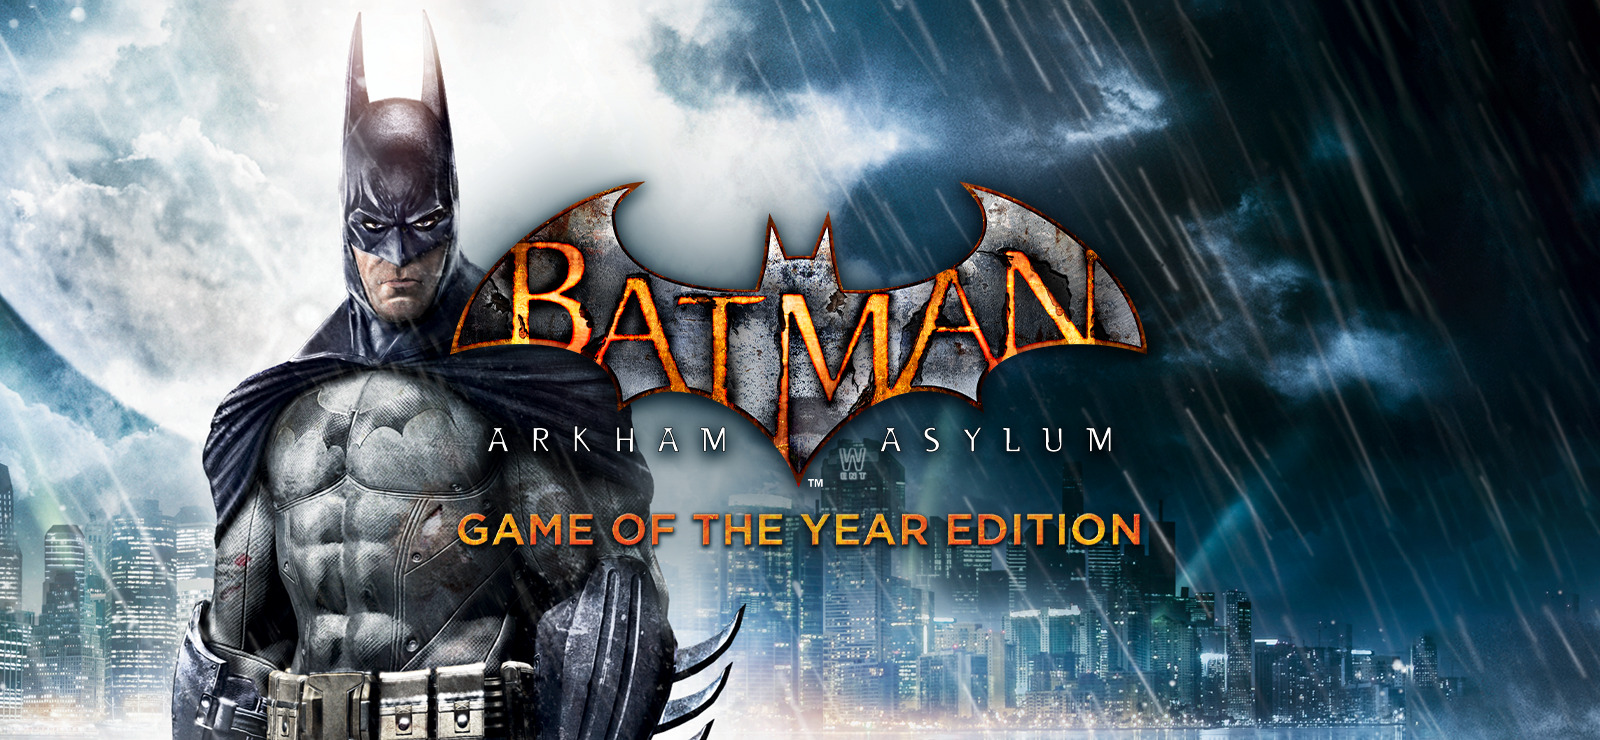 Batman Arkham Asylum PC Download Game for free